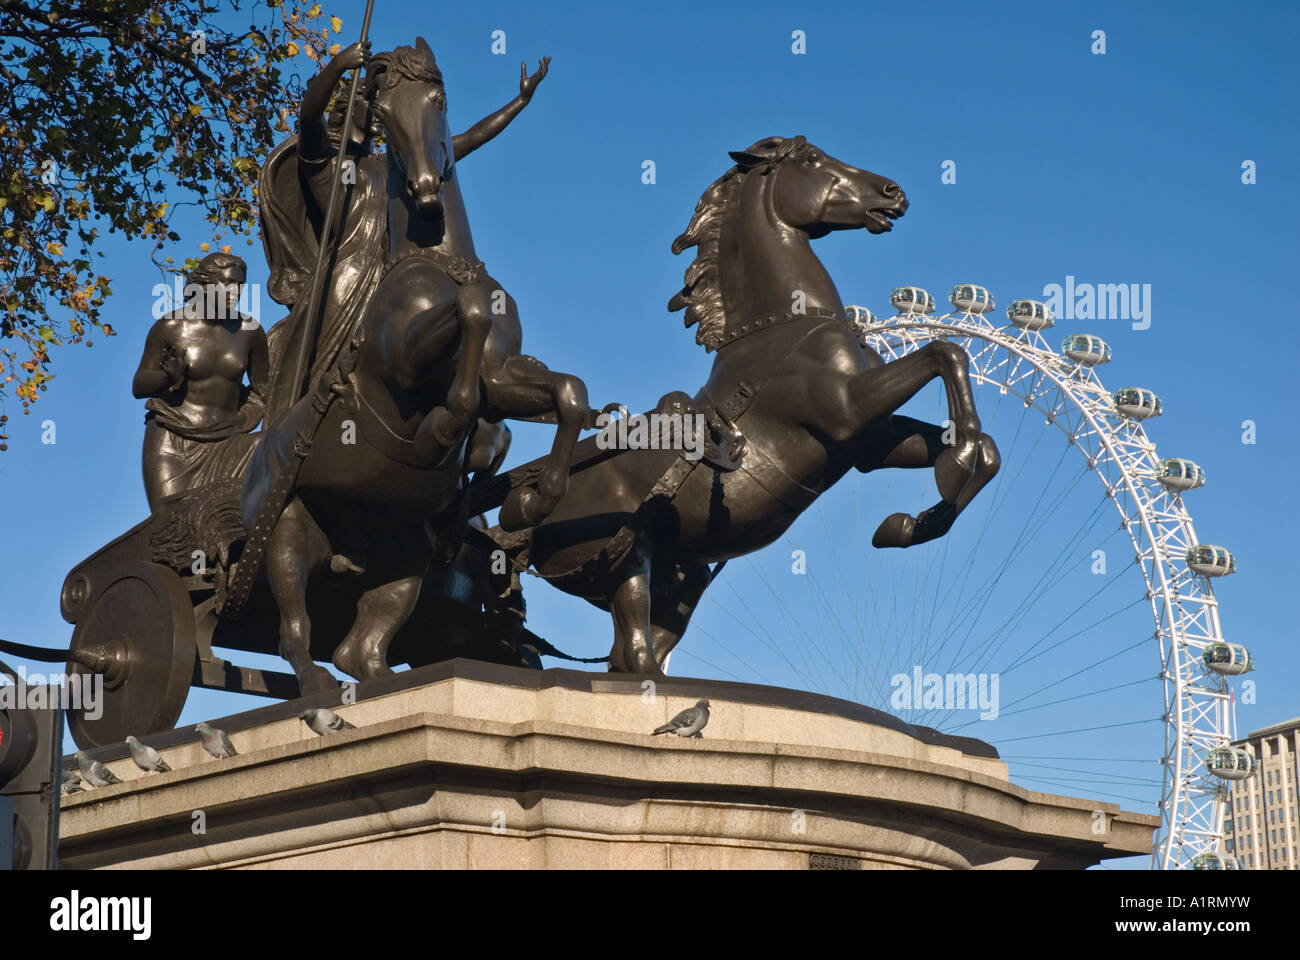 Queen Boadicea statue and Millennium Wheel London UK Stock Photo